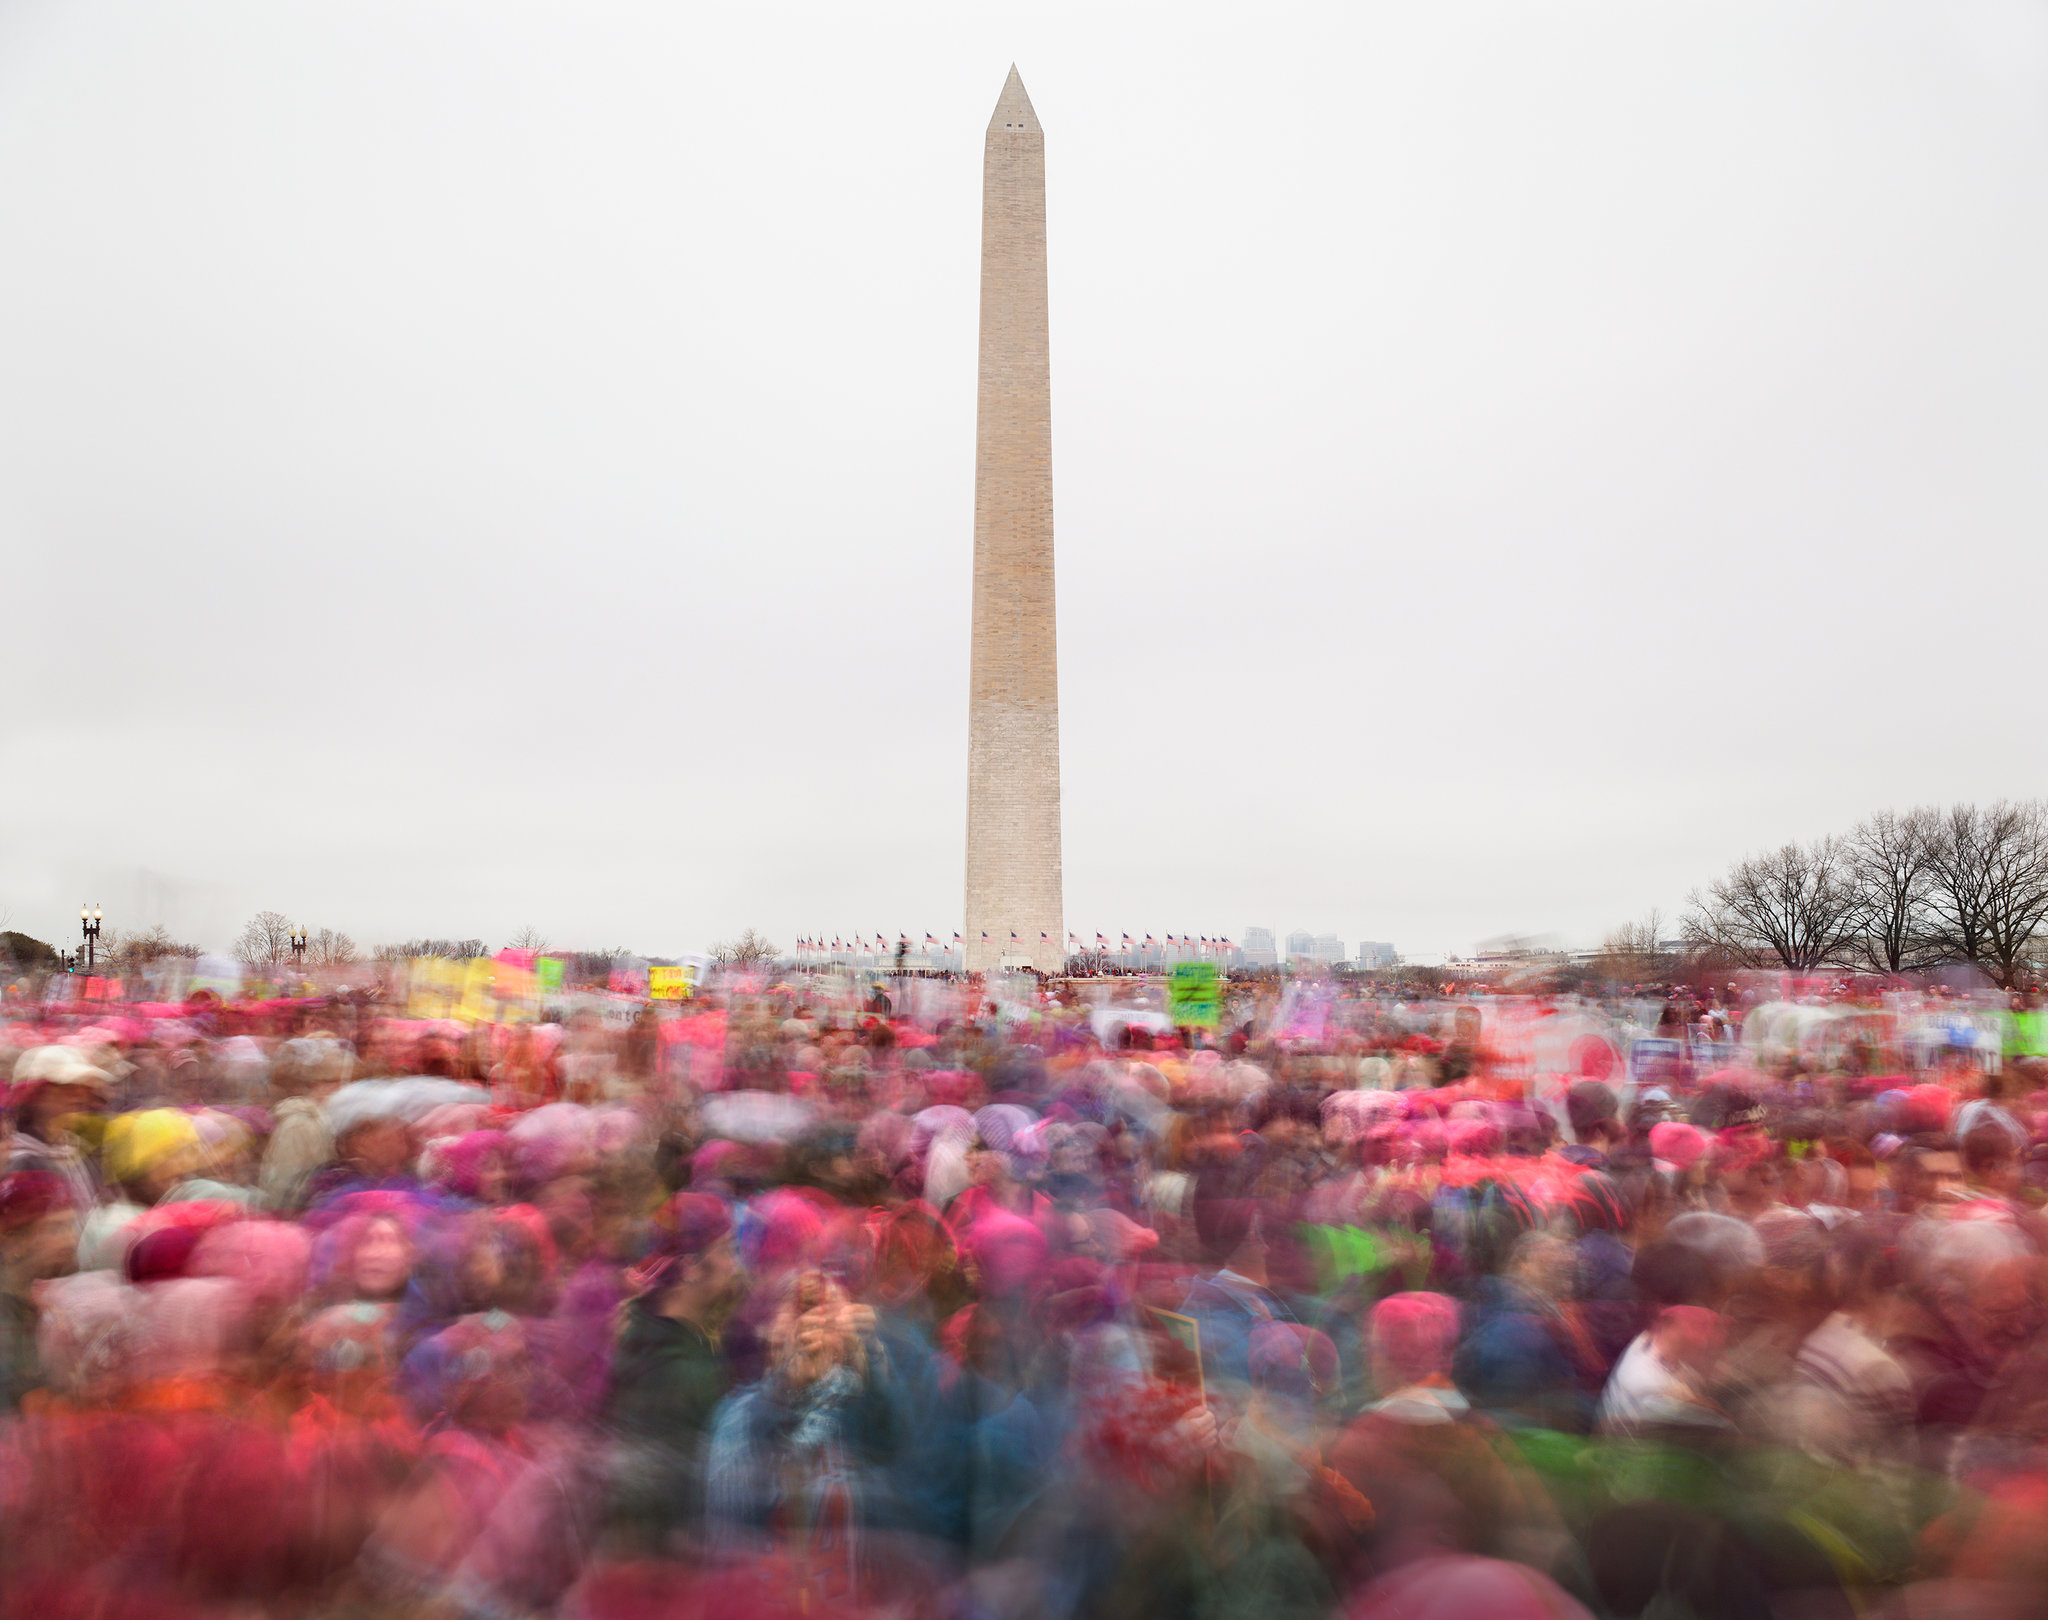  Women’s March on Washington, Jan. 21, 2017.&nbsp;CreditMatthew Pillsbury for The New York Times 